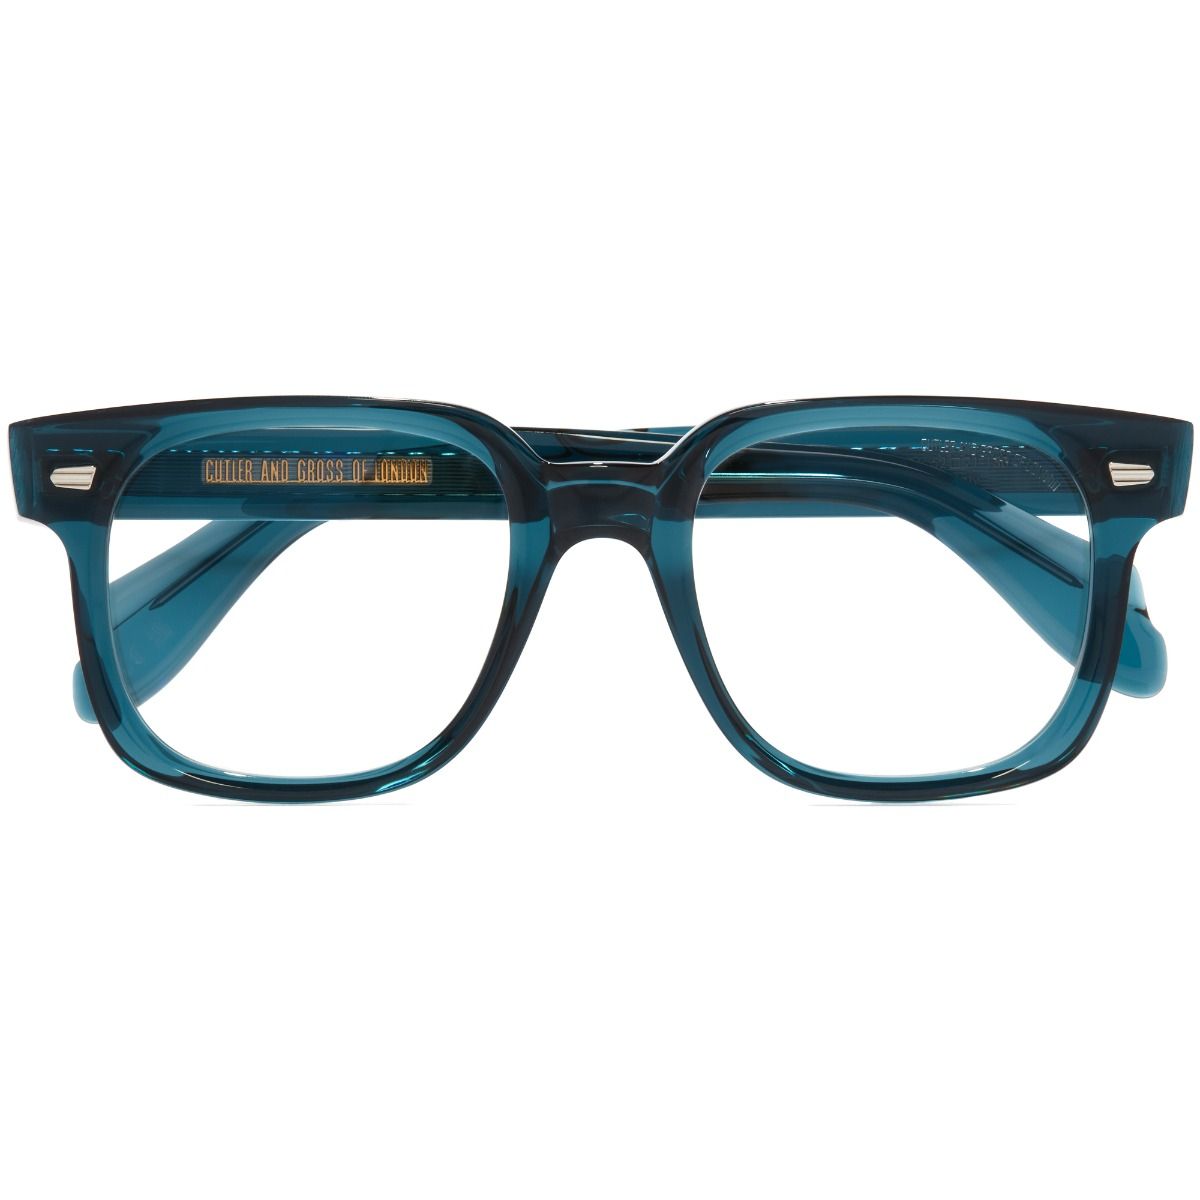 1399 Optical Square Glasses-Deep Teal